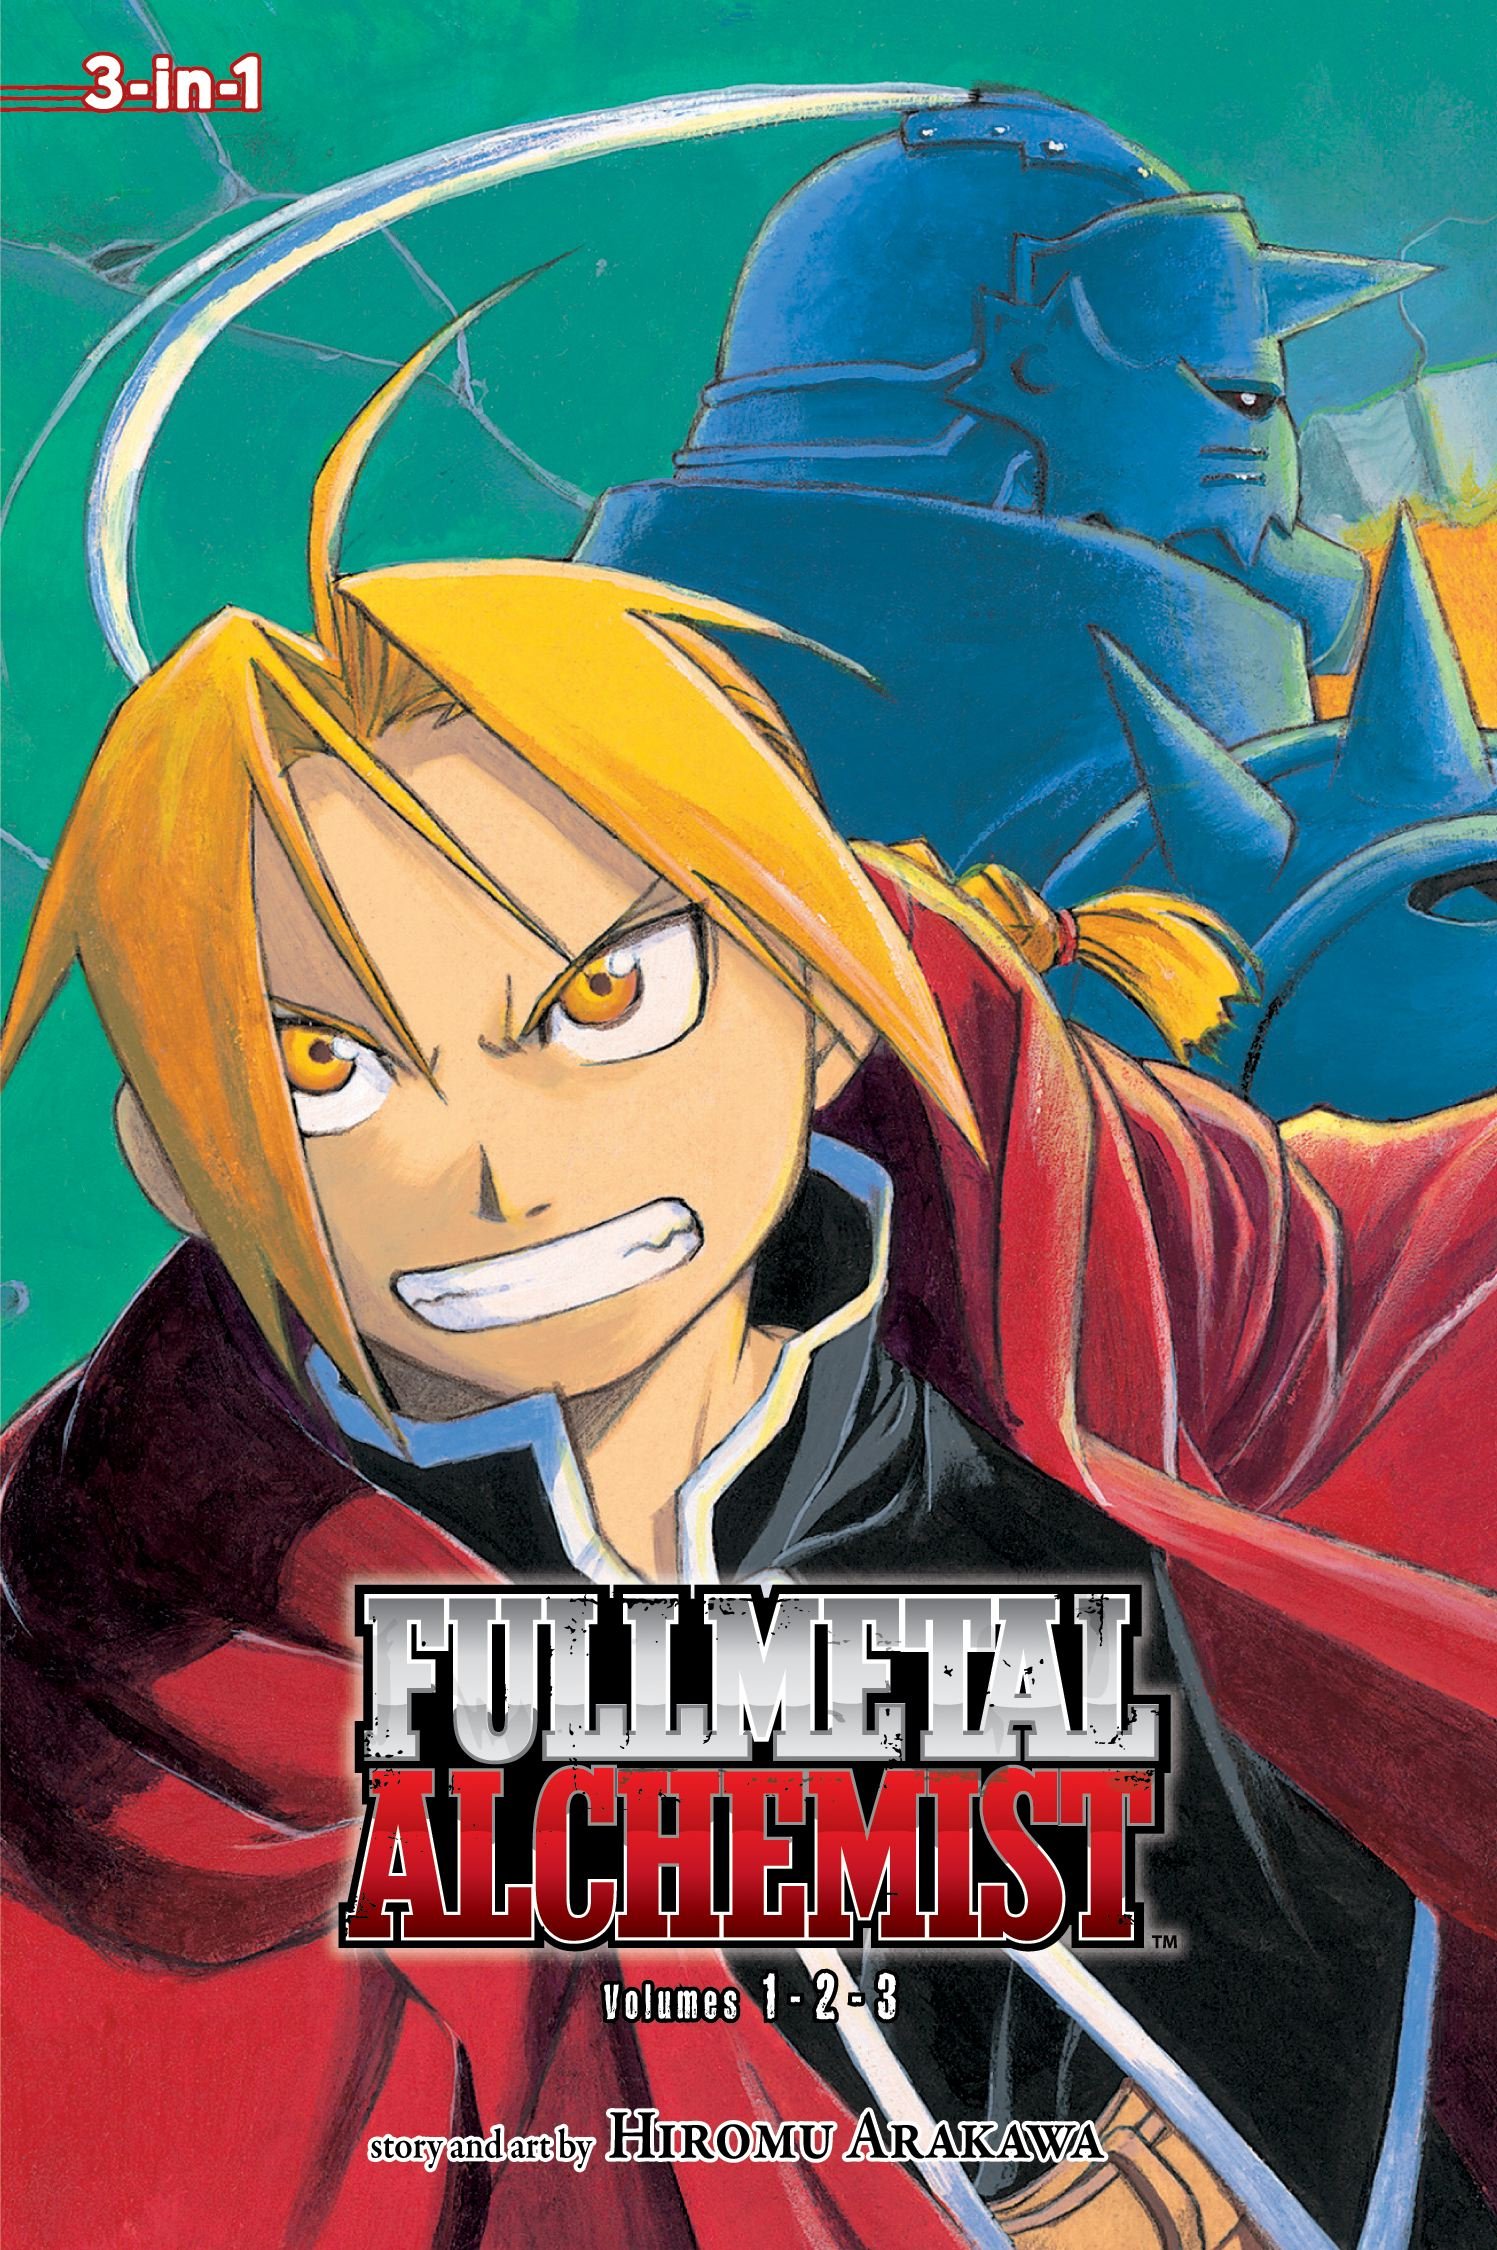 Fullmetal Alchemist, Volumes 1-3